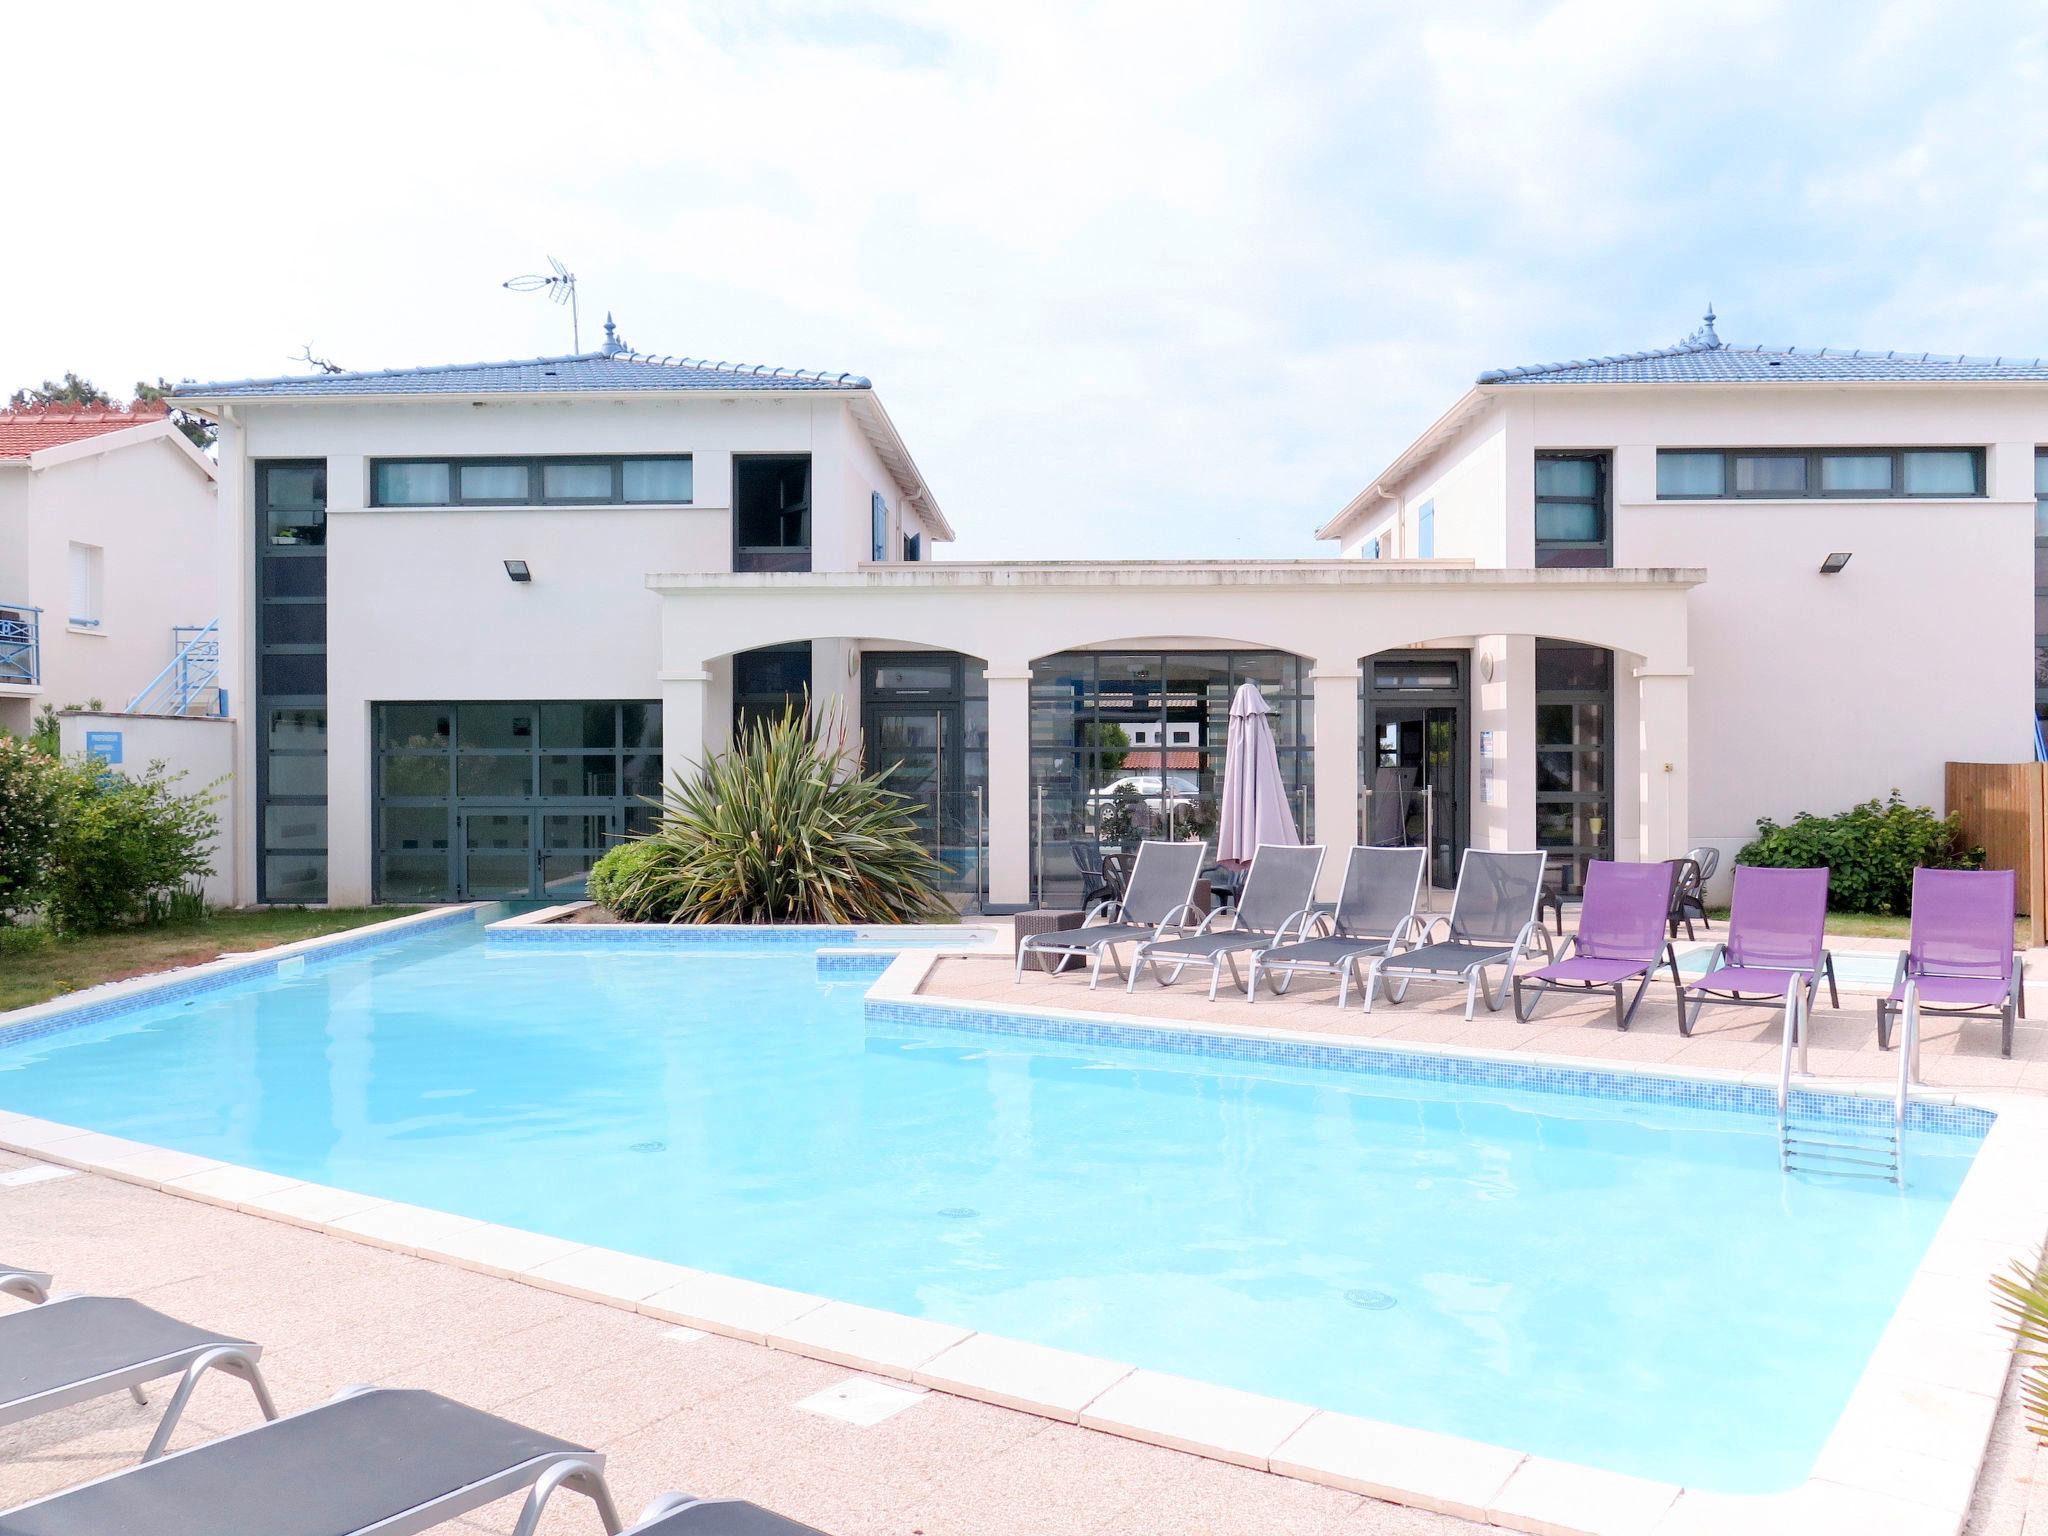 Foto 1 - Appartamento con 2 camere da letto a Saint-Palais-sur-Mer con piscina e vista mare